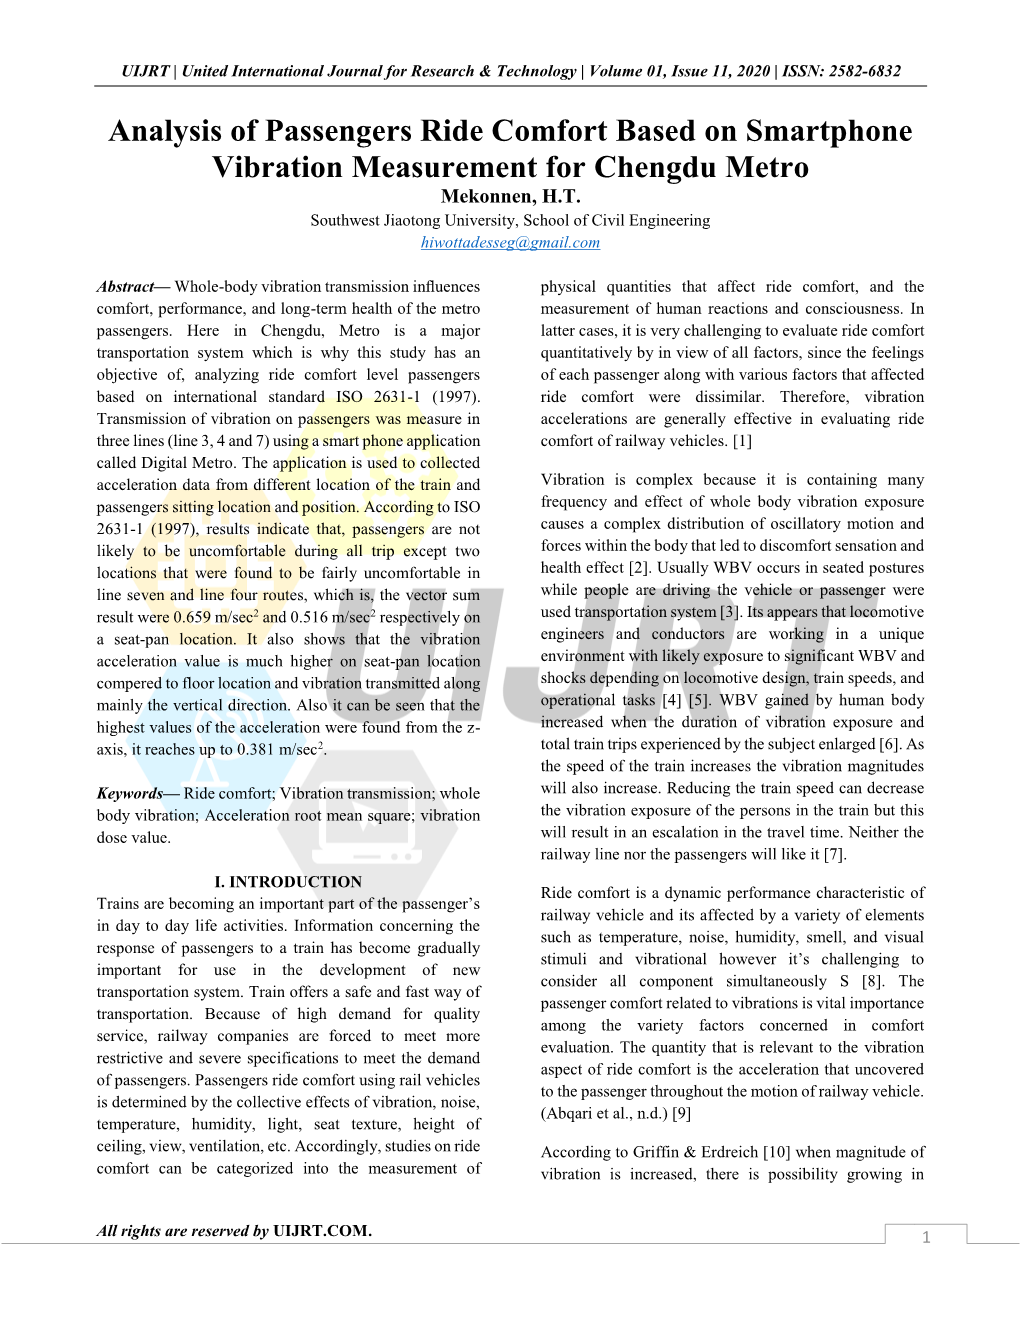 Analysis of Passengers Ride Comfort Based on Smartphone Vibration Measurement for Chengdu Metro Mekonnen, H.T